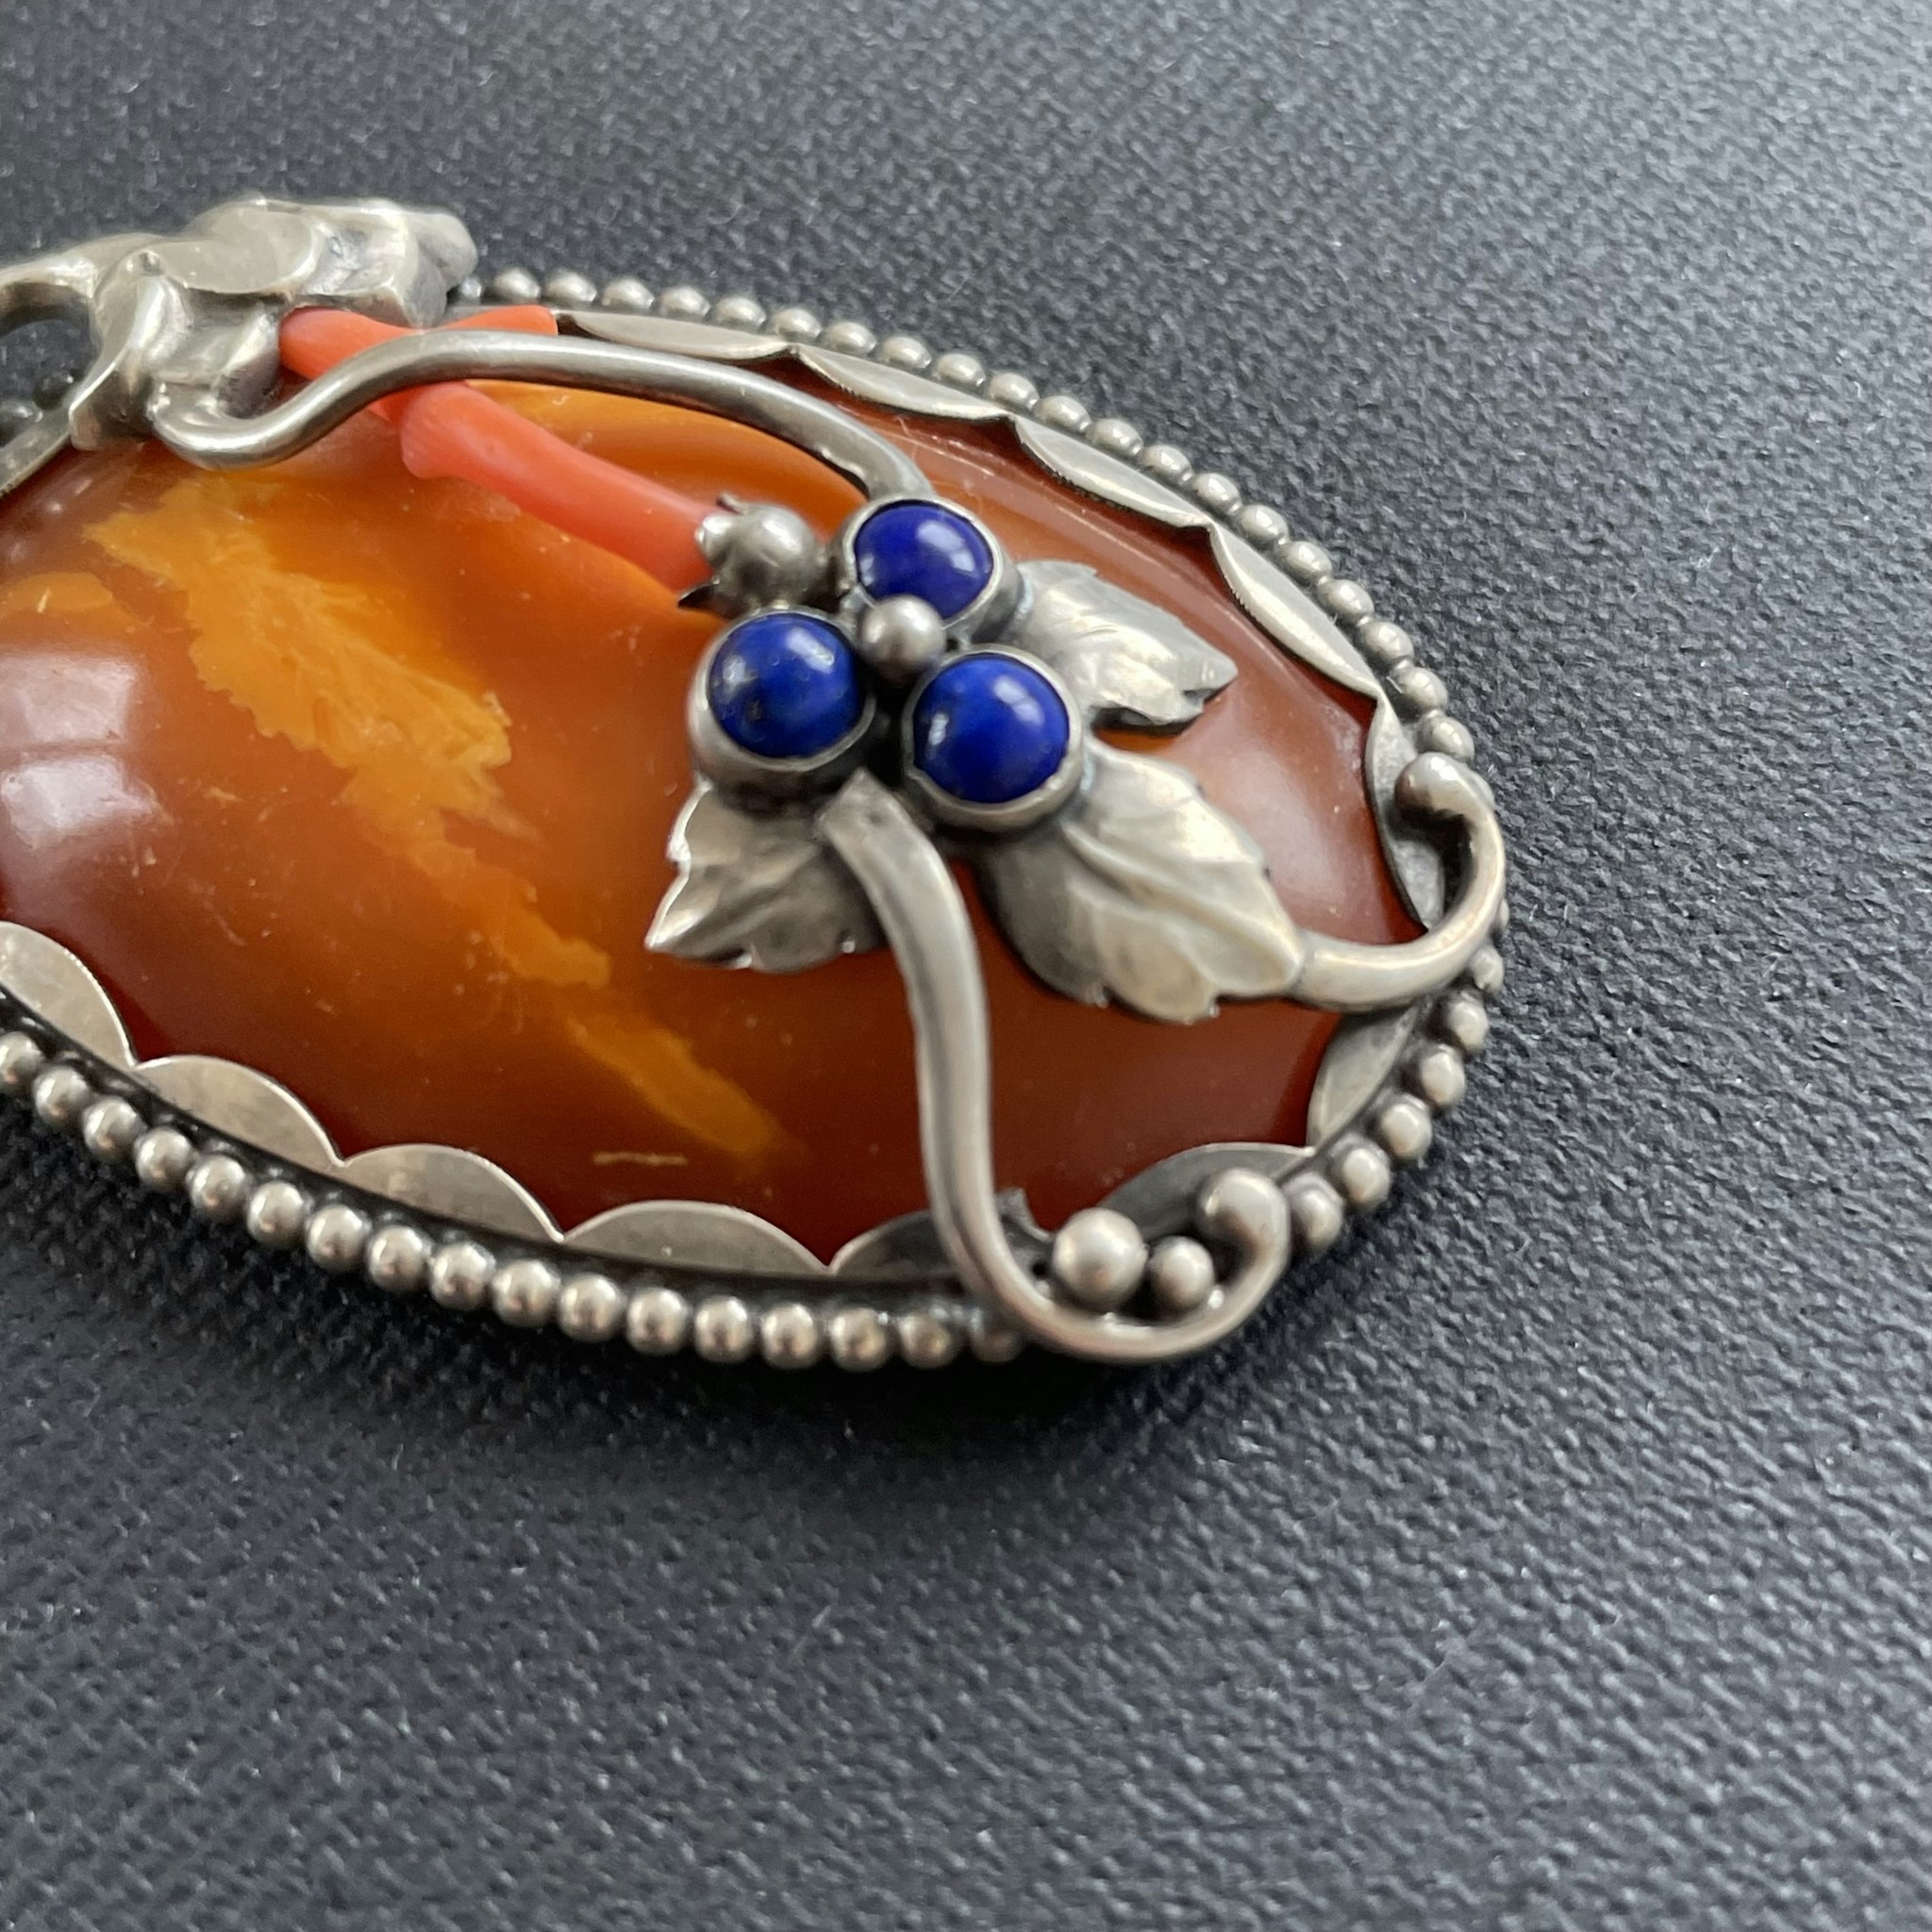 Natural Amber Antique Amber Pendant With Silver Egg Yolk Art Nouveau 1930 Sweden